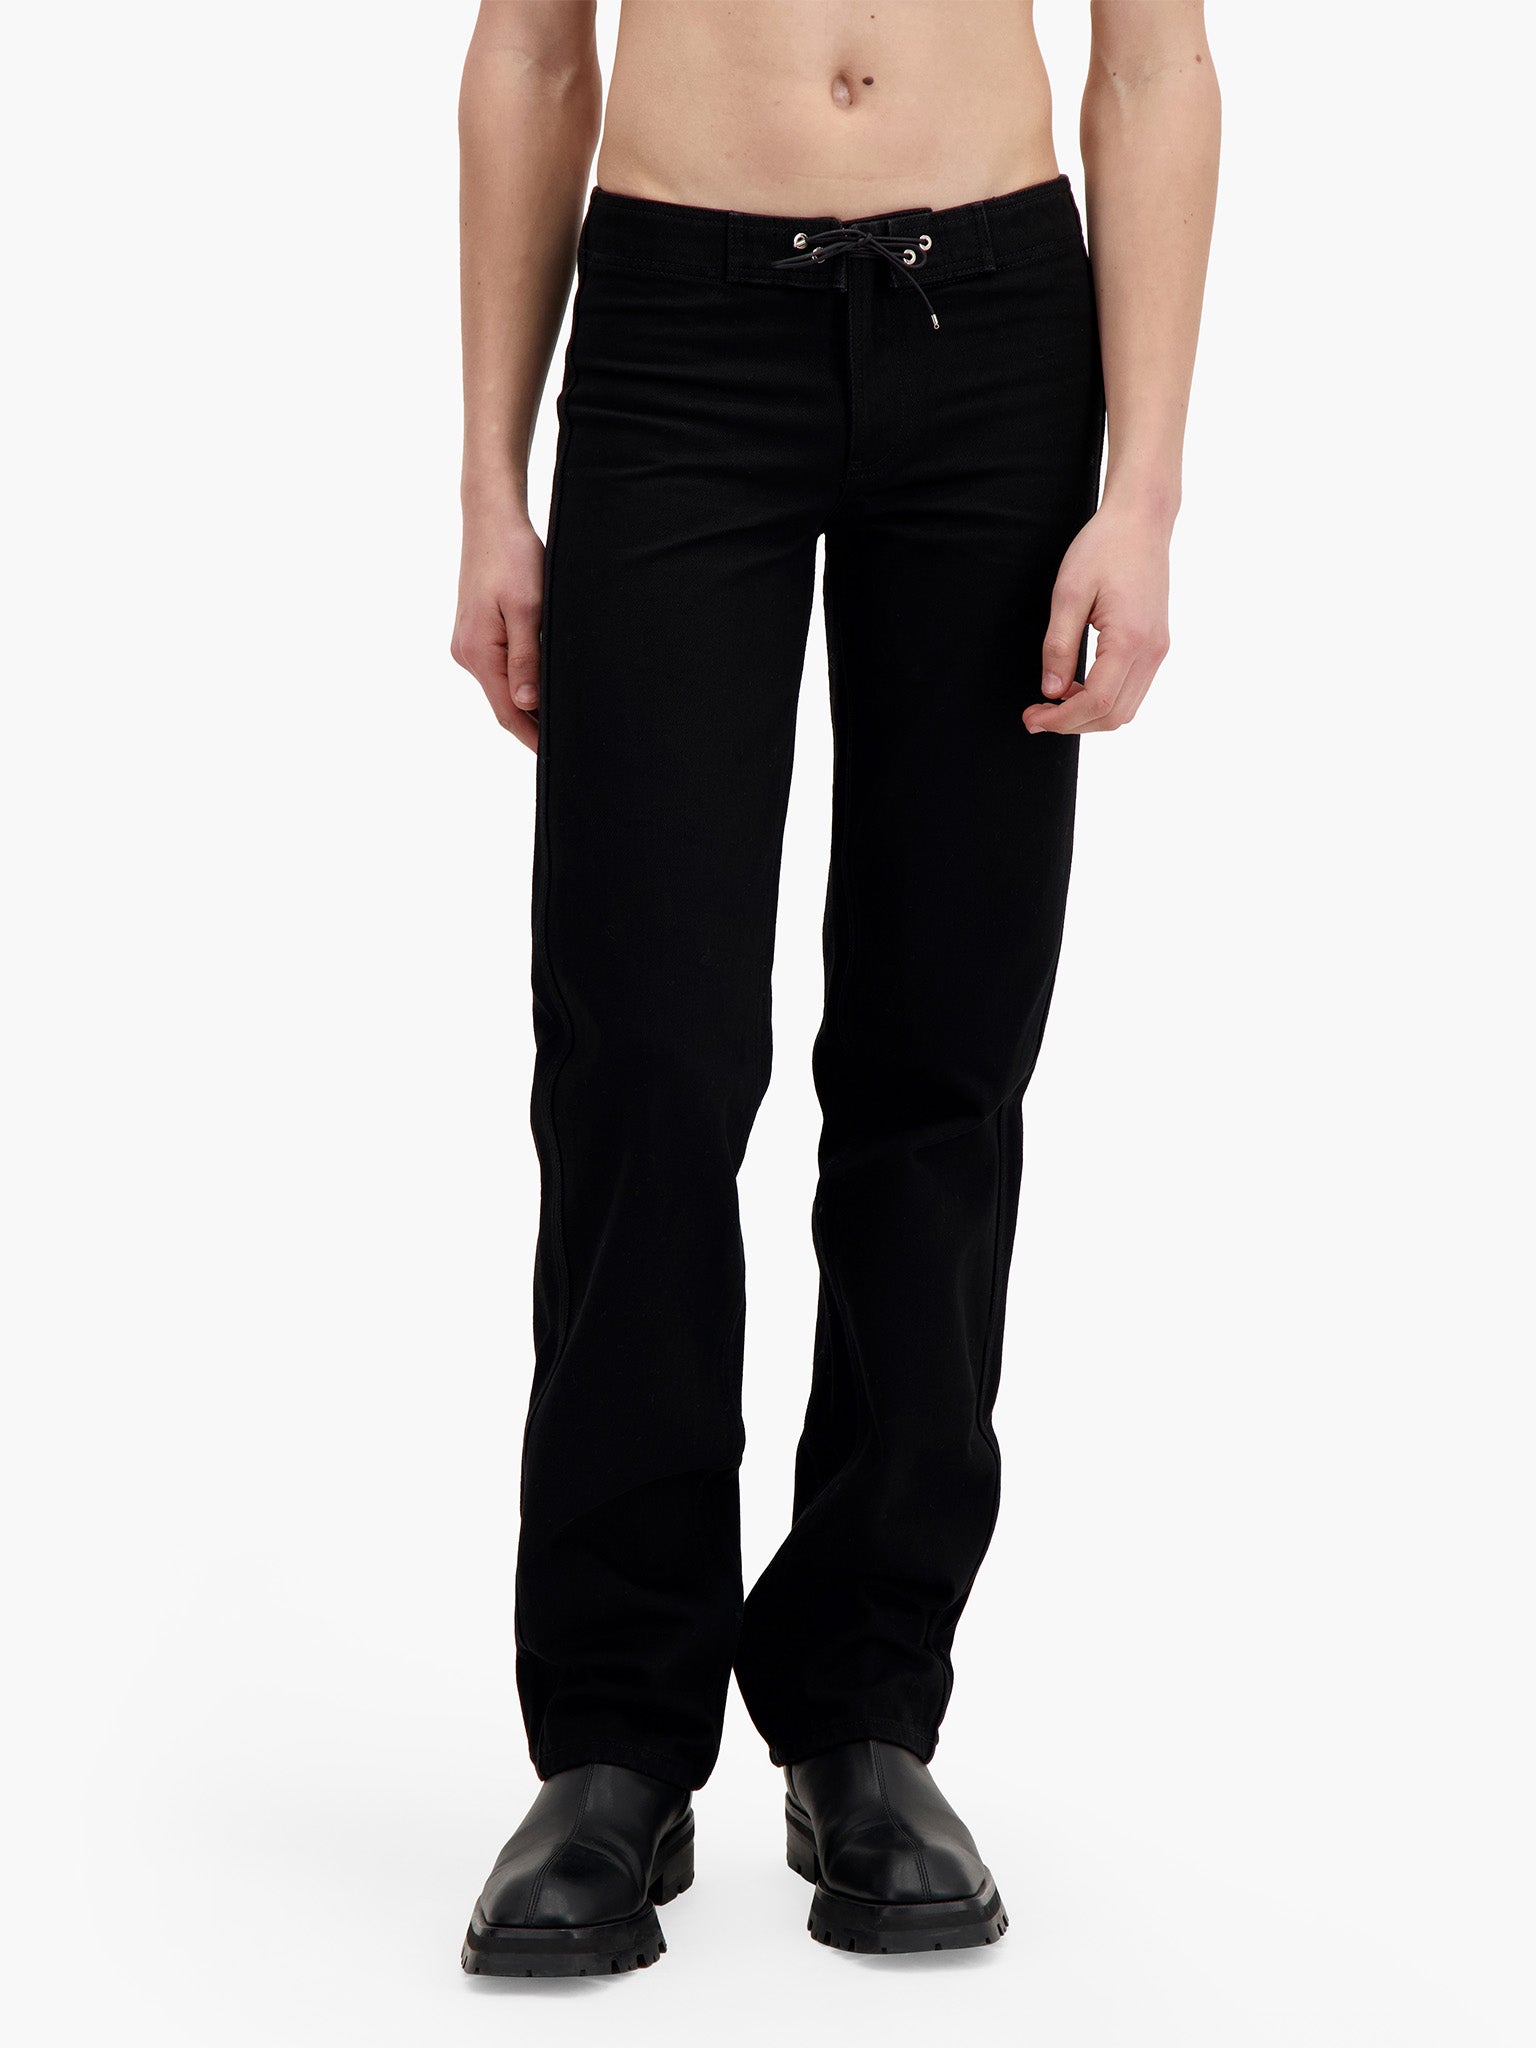 denim black straight fit baggy pants for girls.